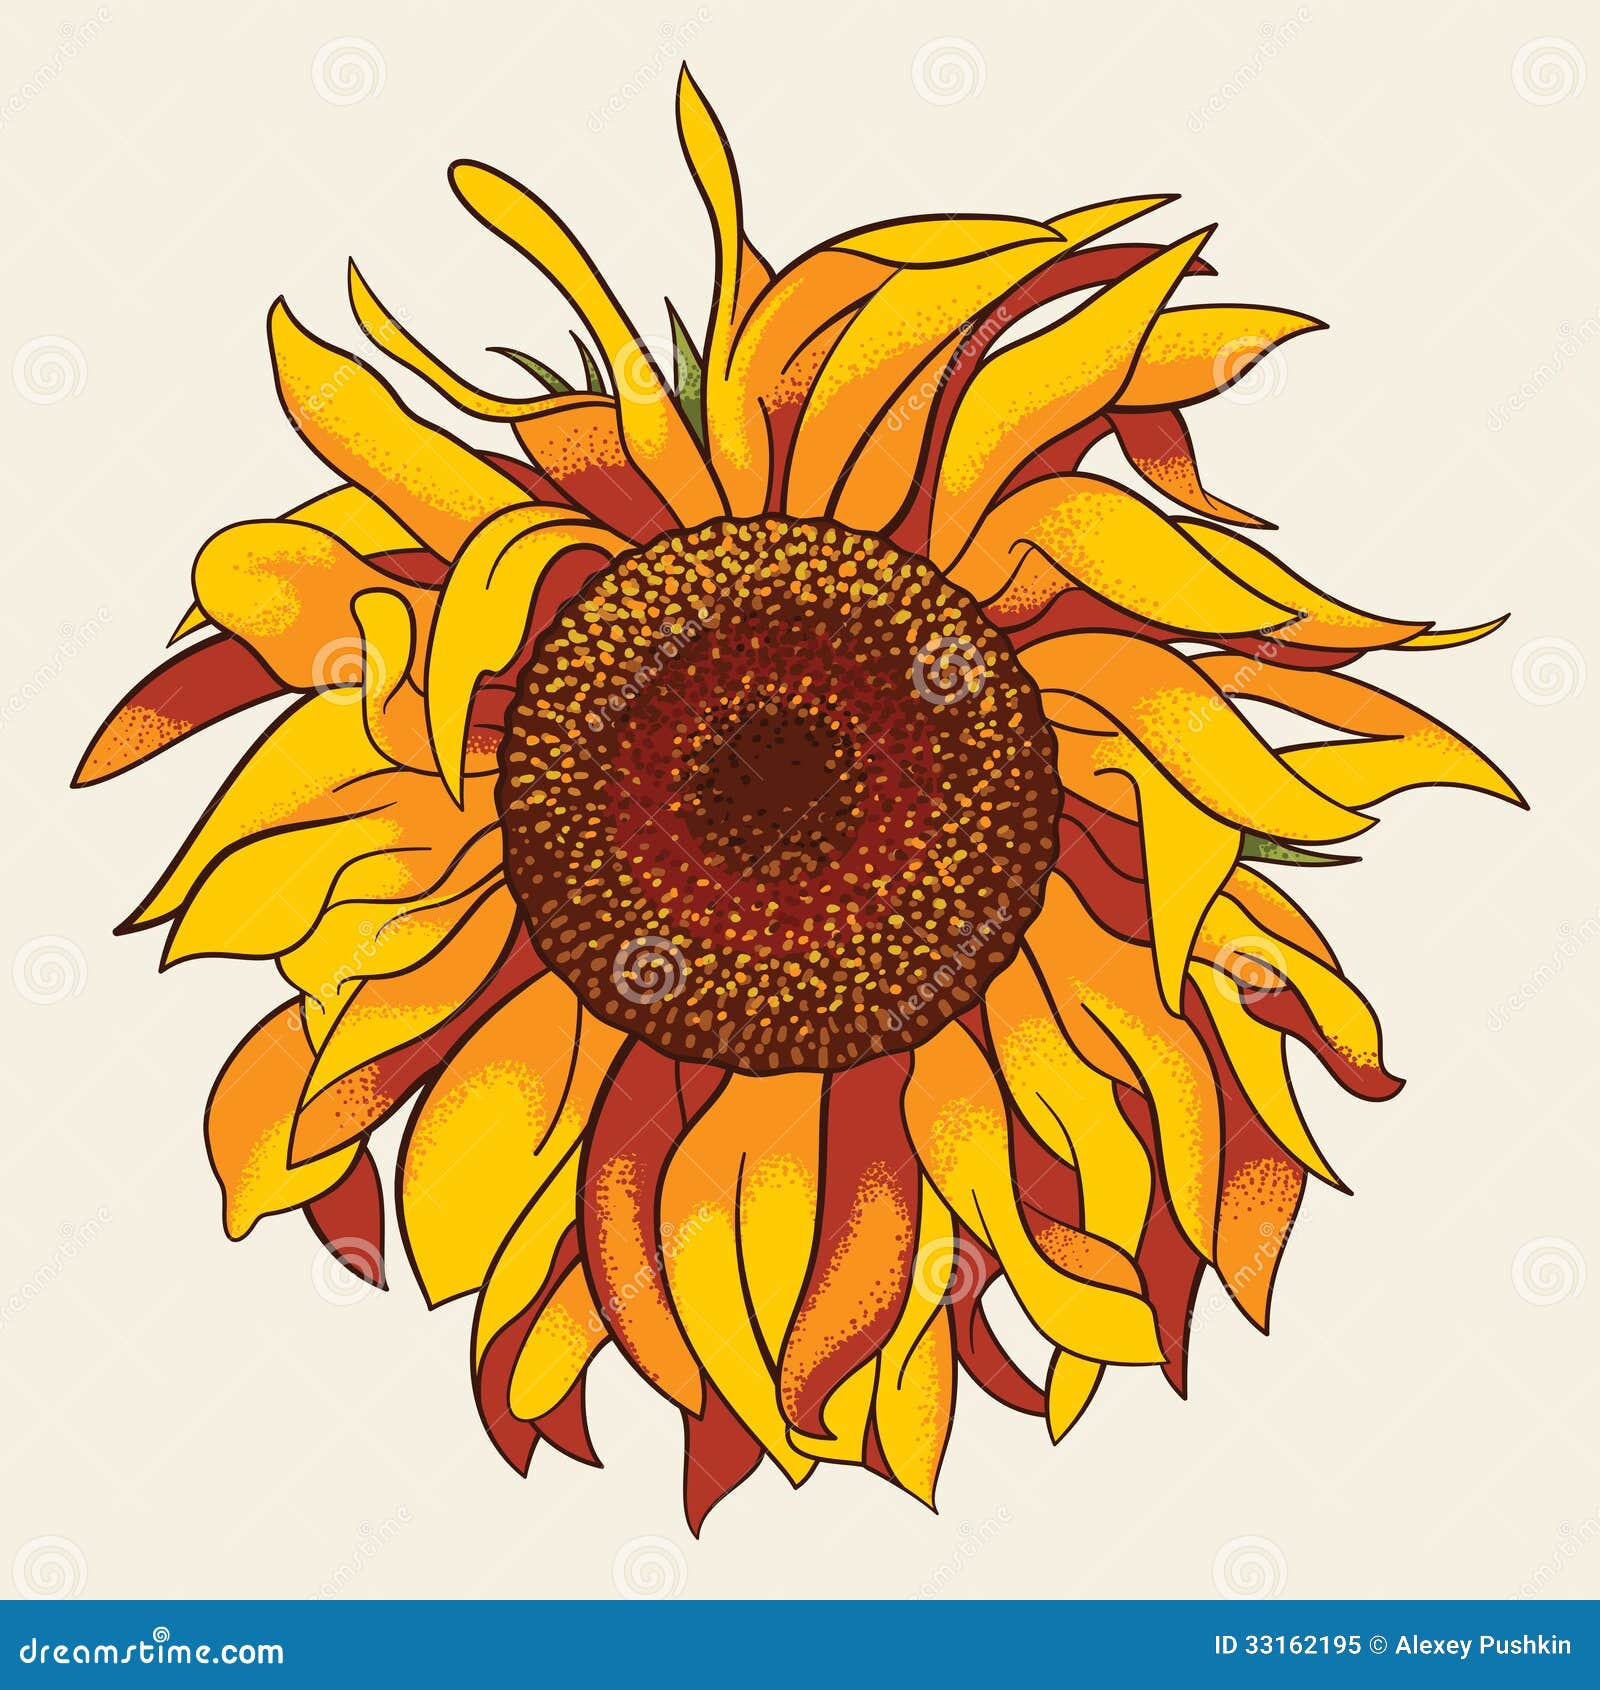 Sunflower Royalty Free Stock Photo - Image: 33162195